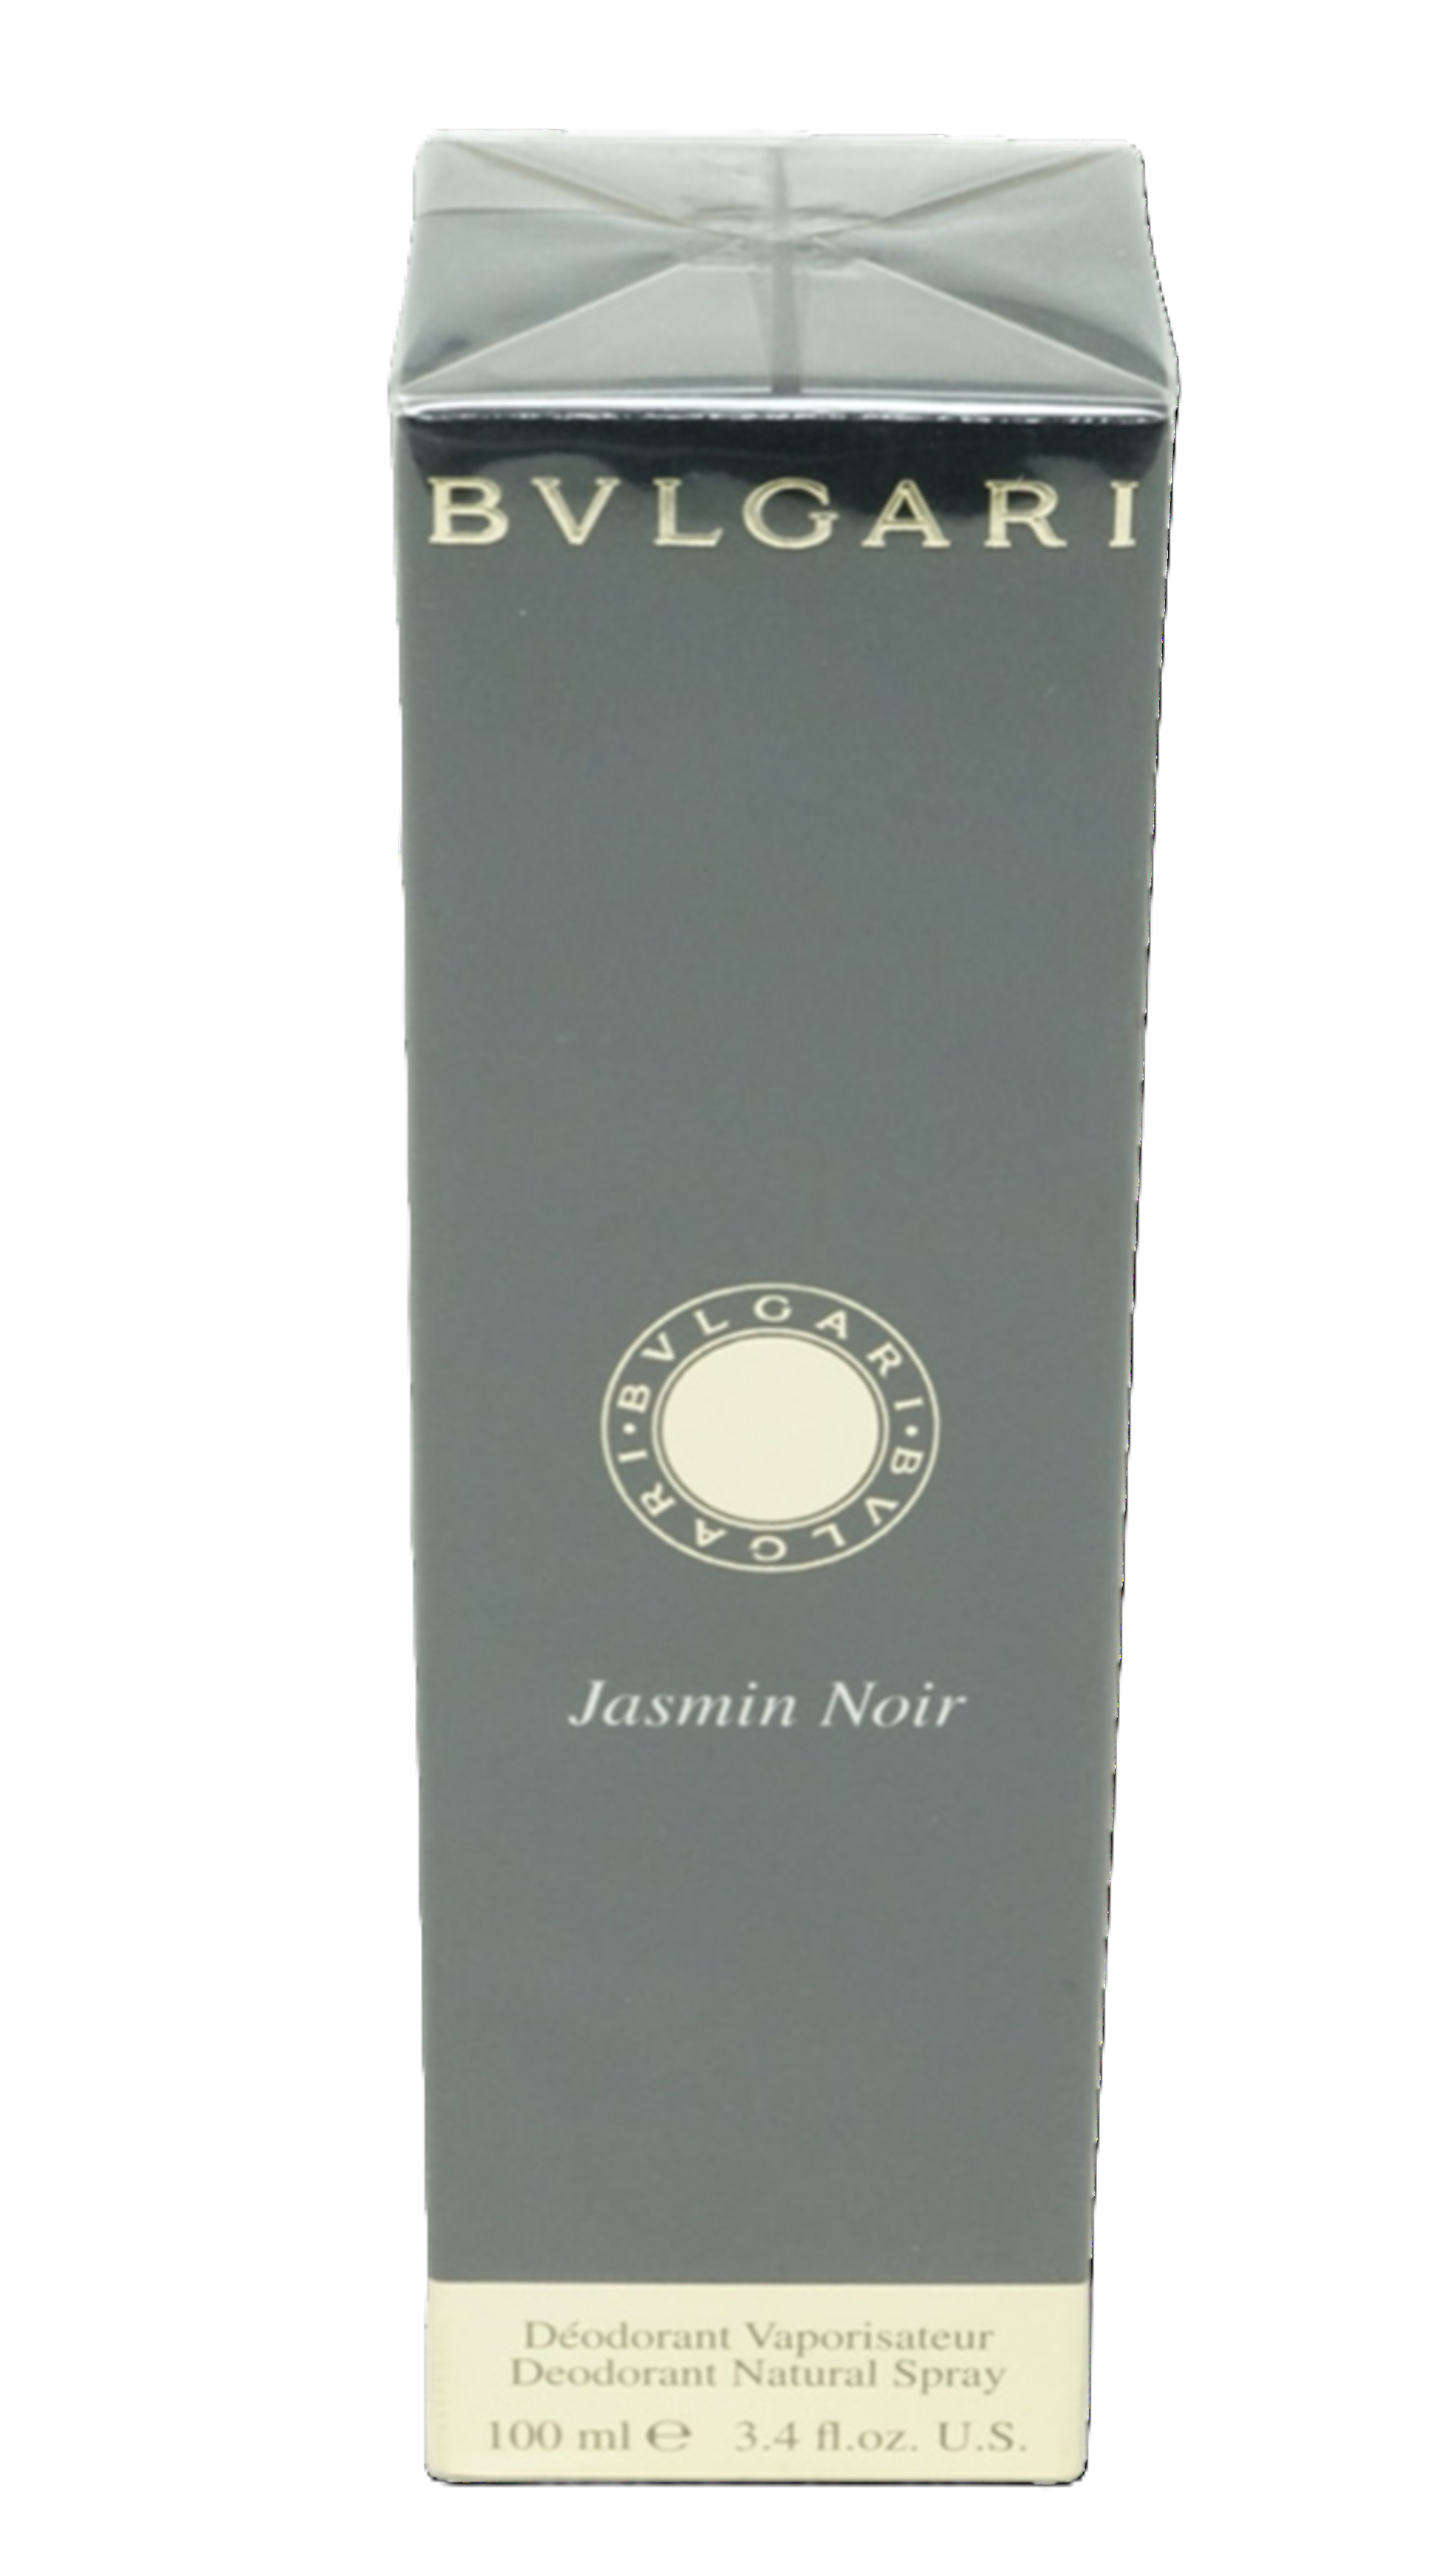 Bvlgari Jasmin Noir Deodorant Spray 100 ml